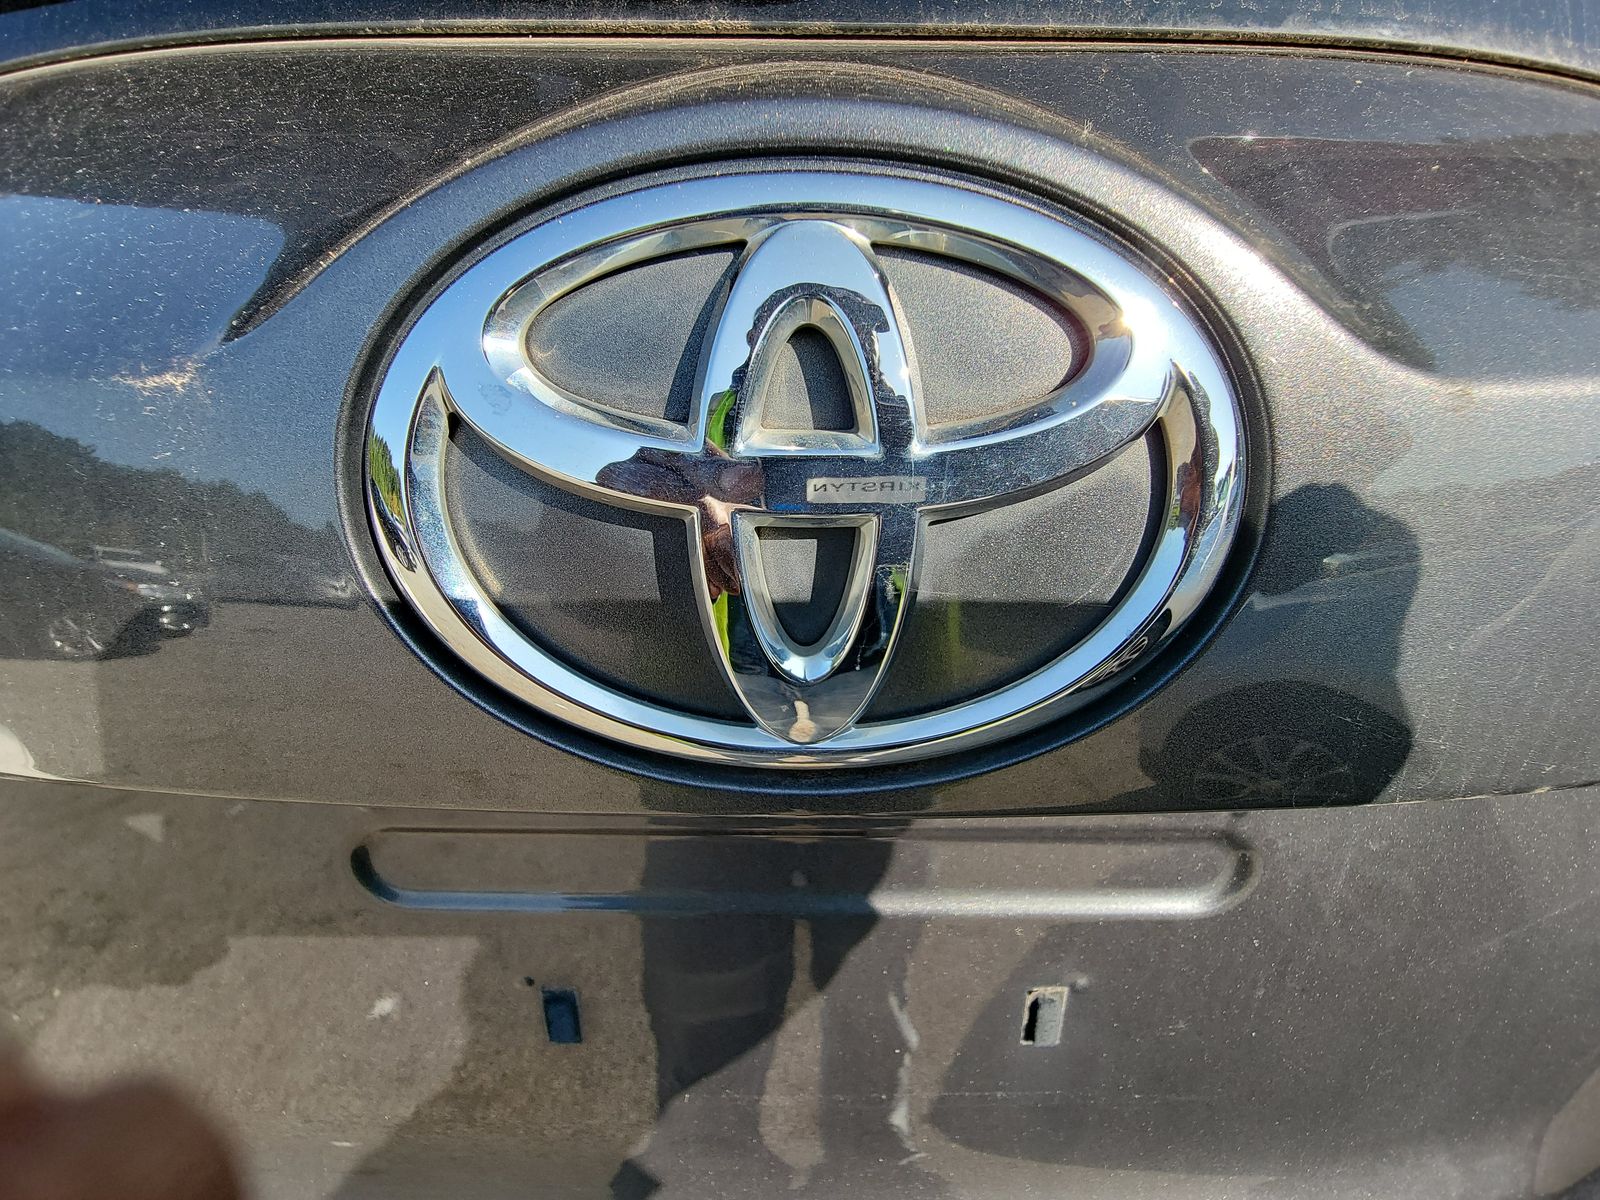 2015 Toyota RAV4 XLE FWD